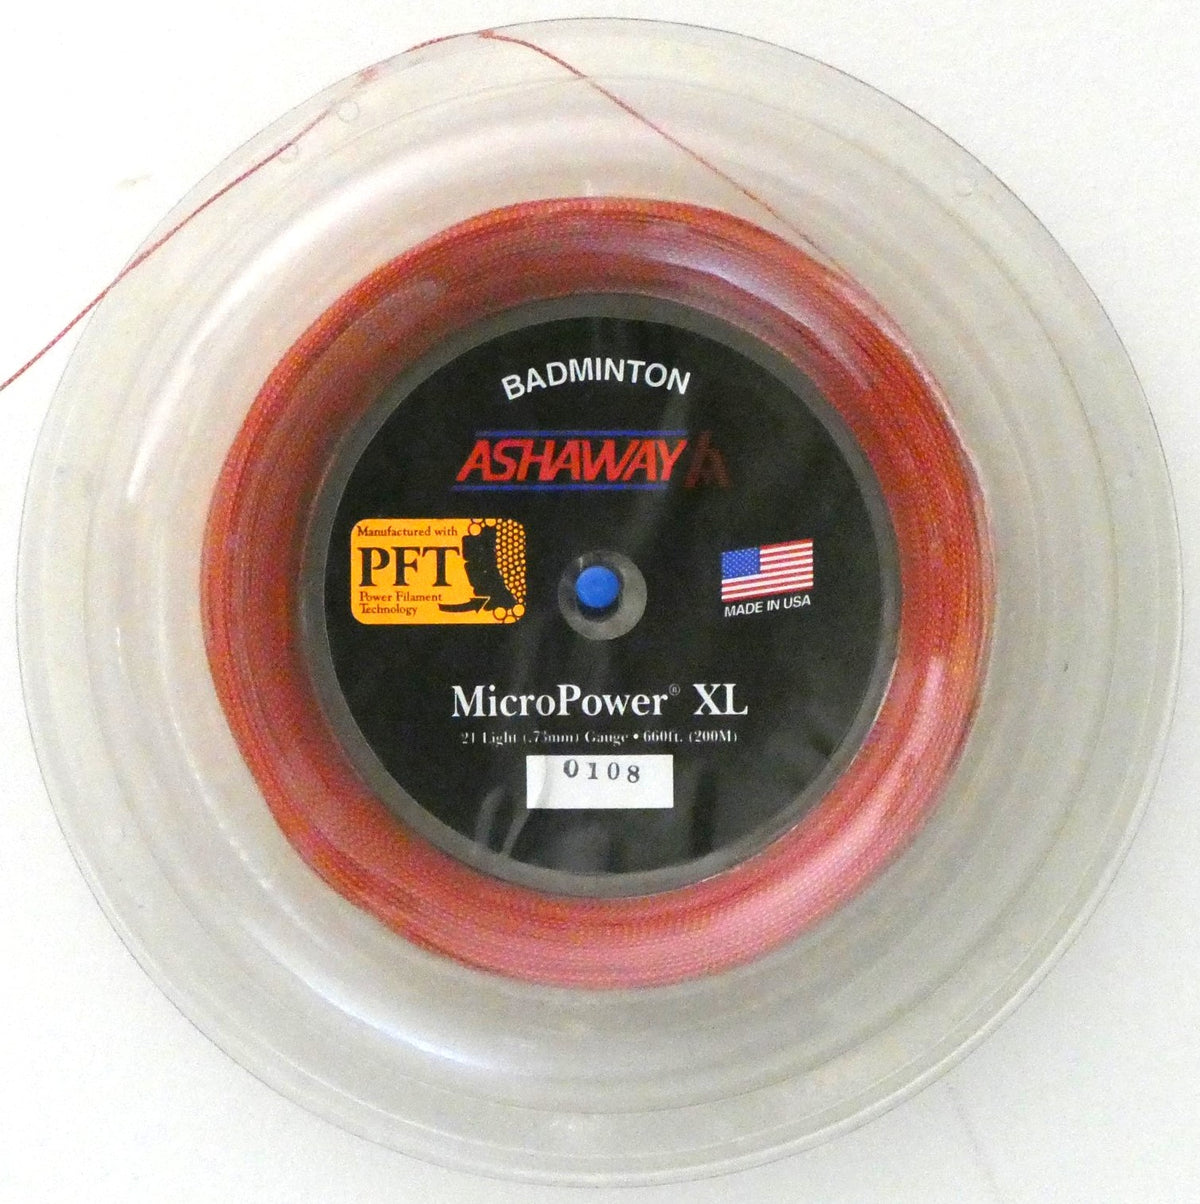 Ashaway MicroPower XL Badminton String, Orange with red spiral, 200 M REEL